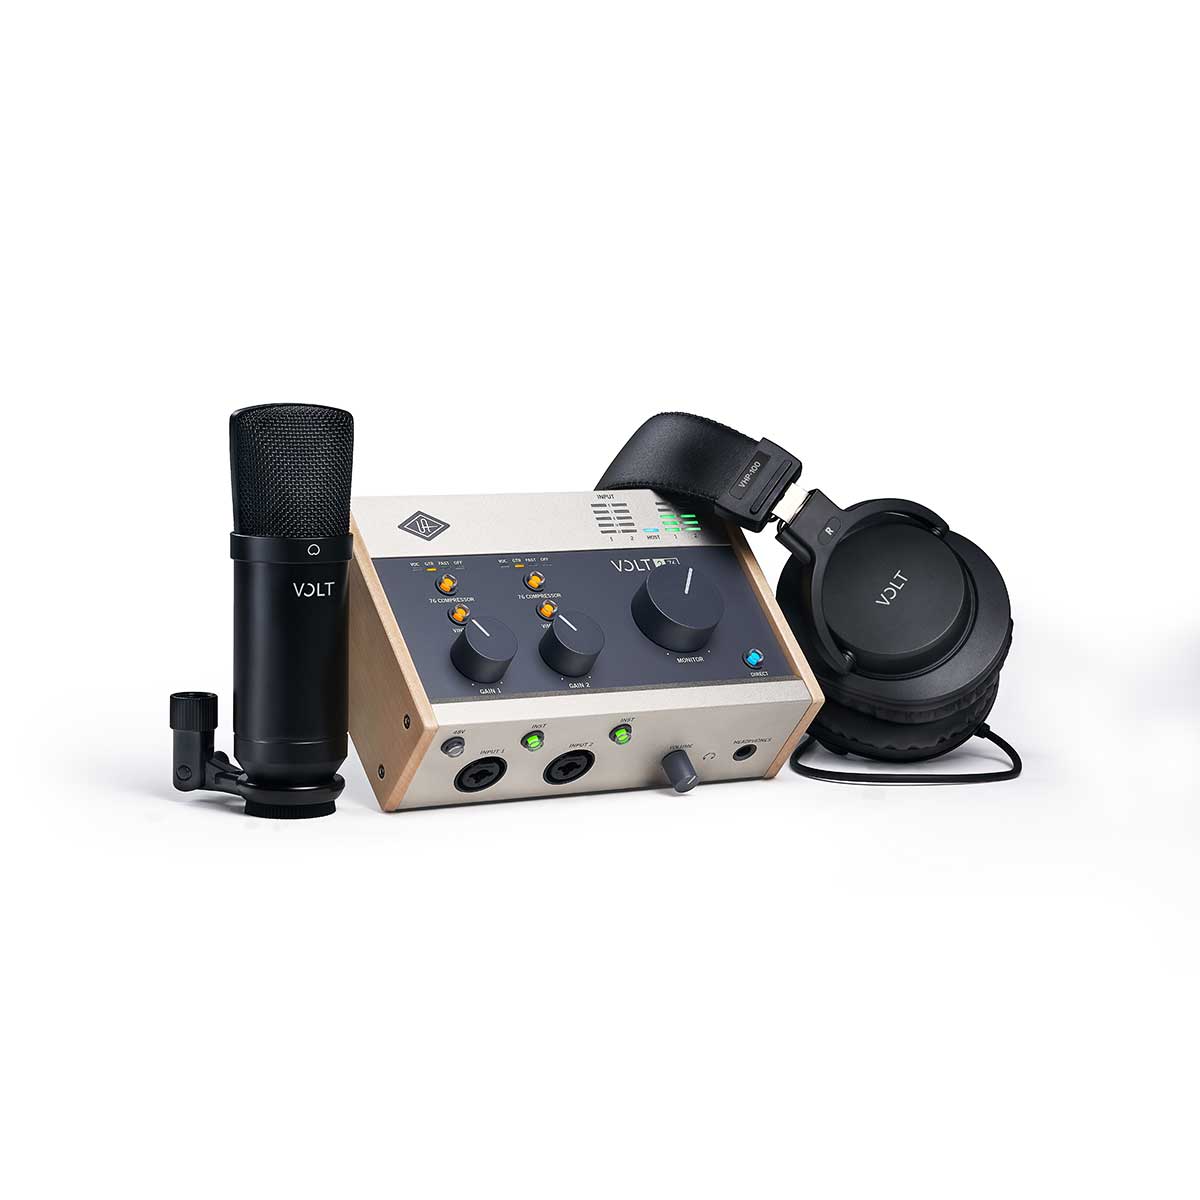 Universal Audio Volt 276 bundle with microphone and headphones